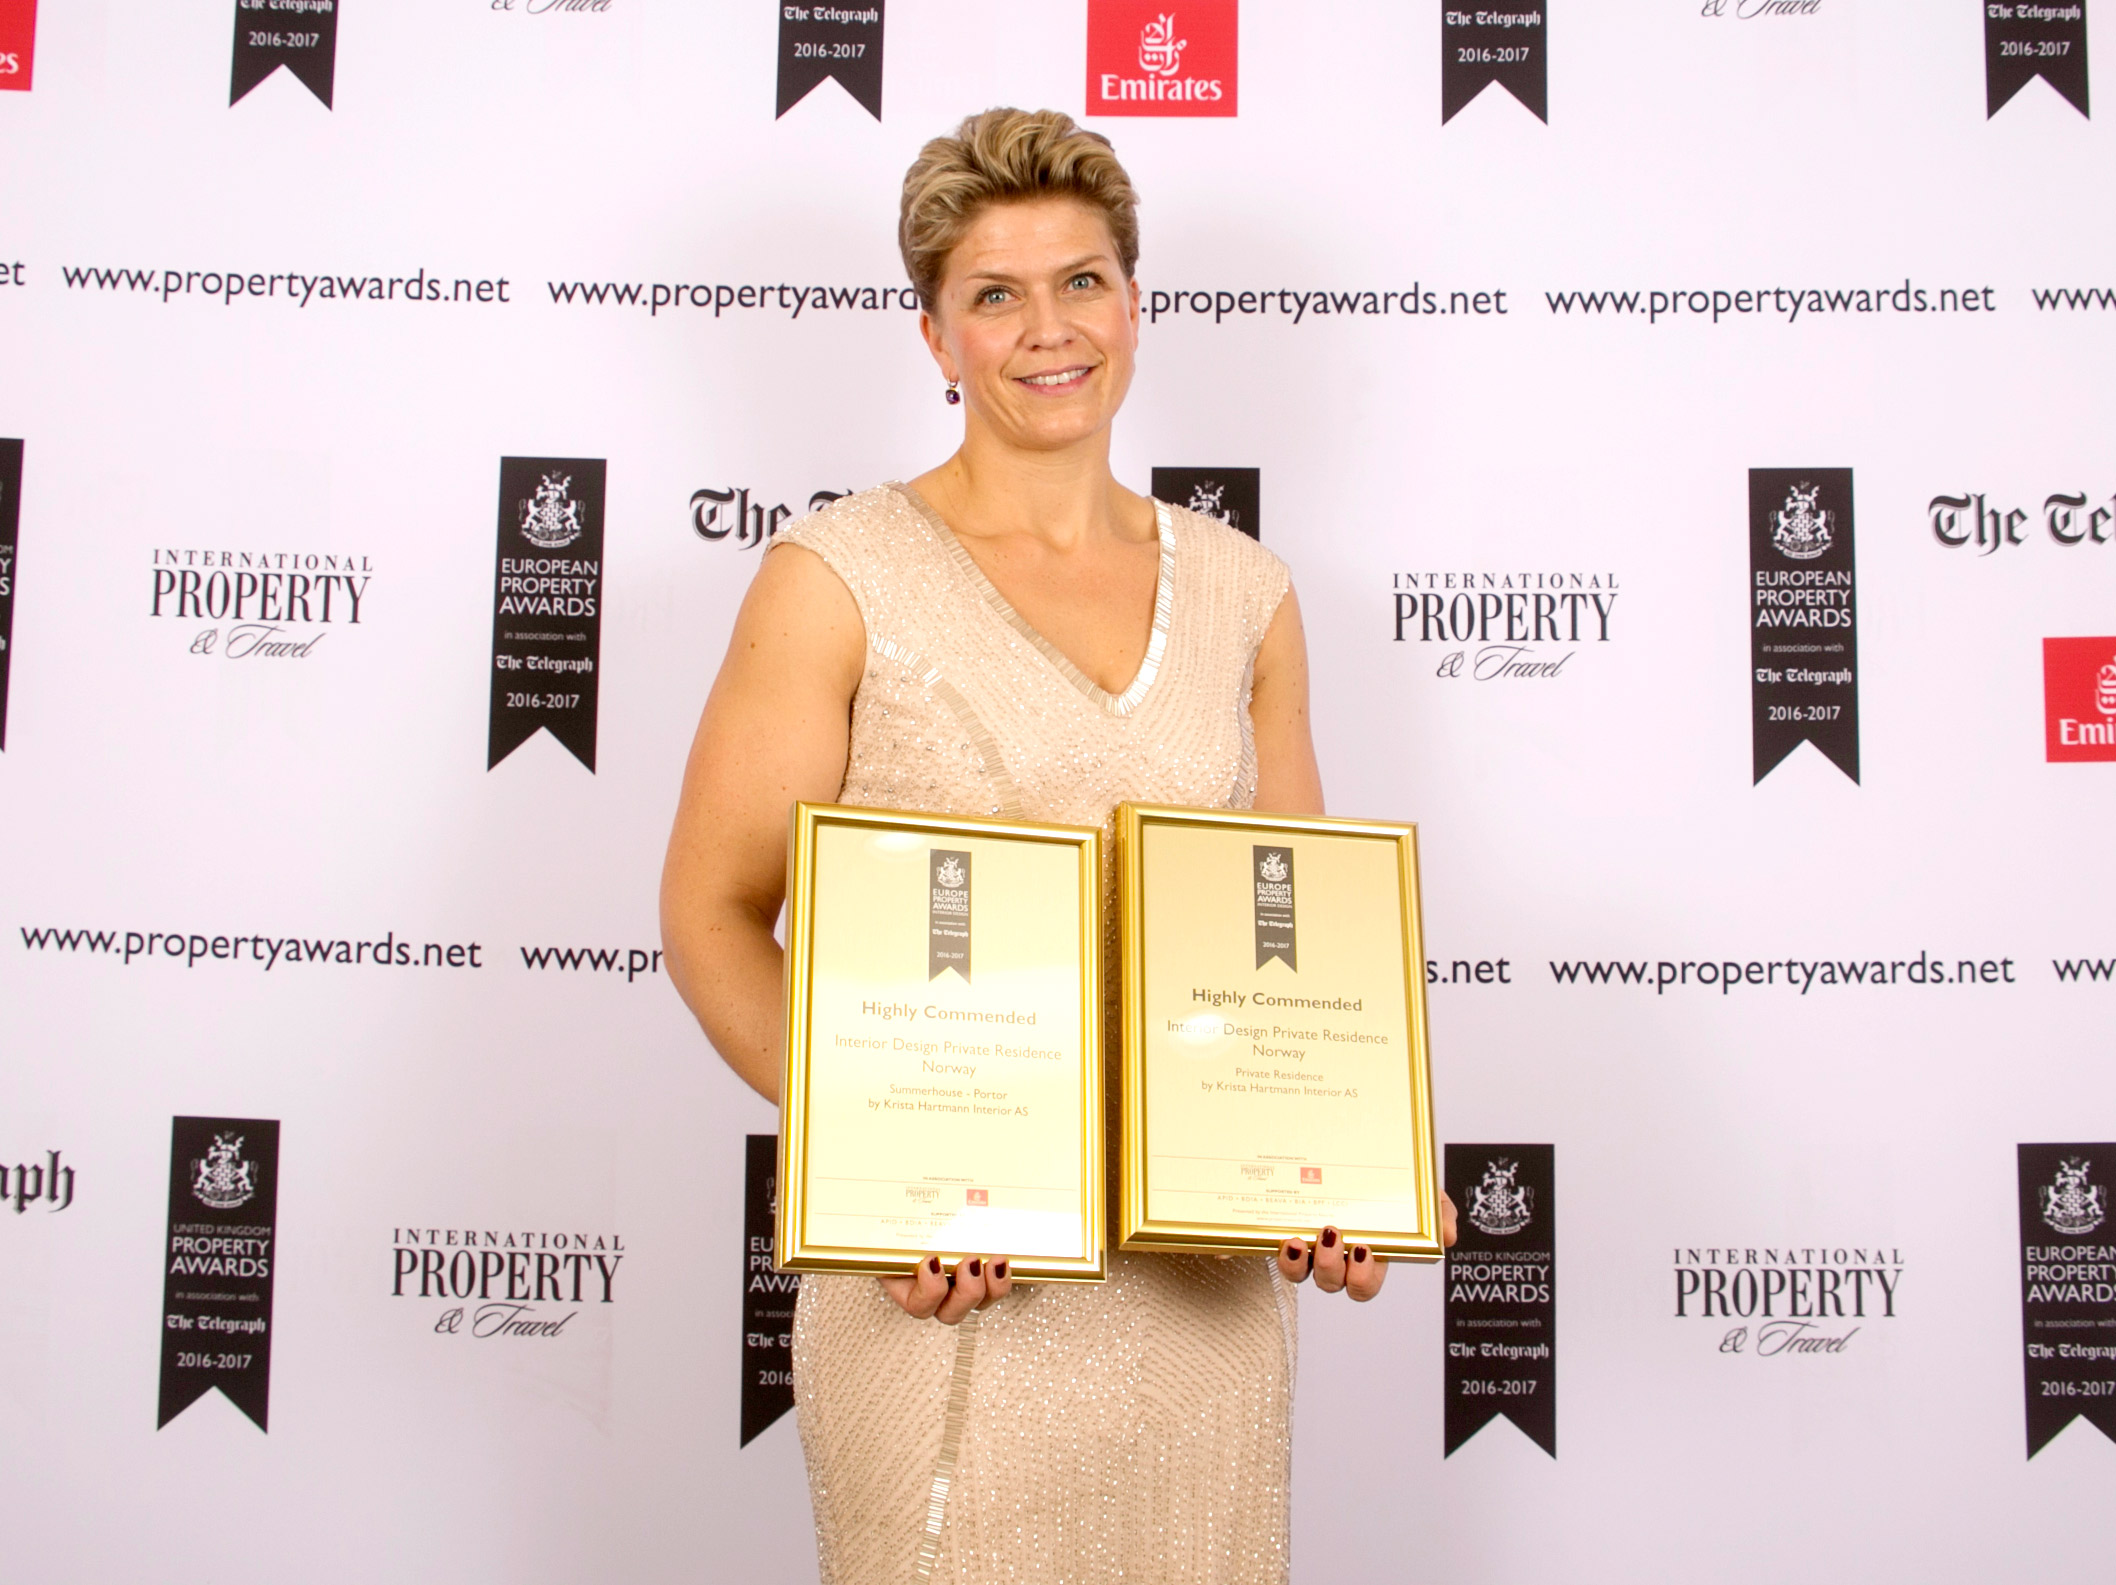 European-property-award-portrett.jpg